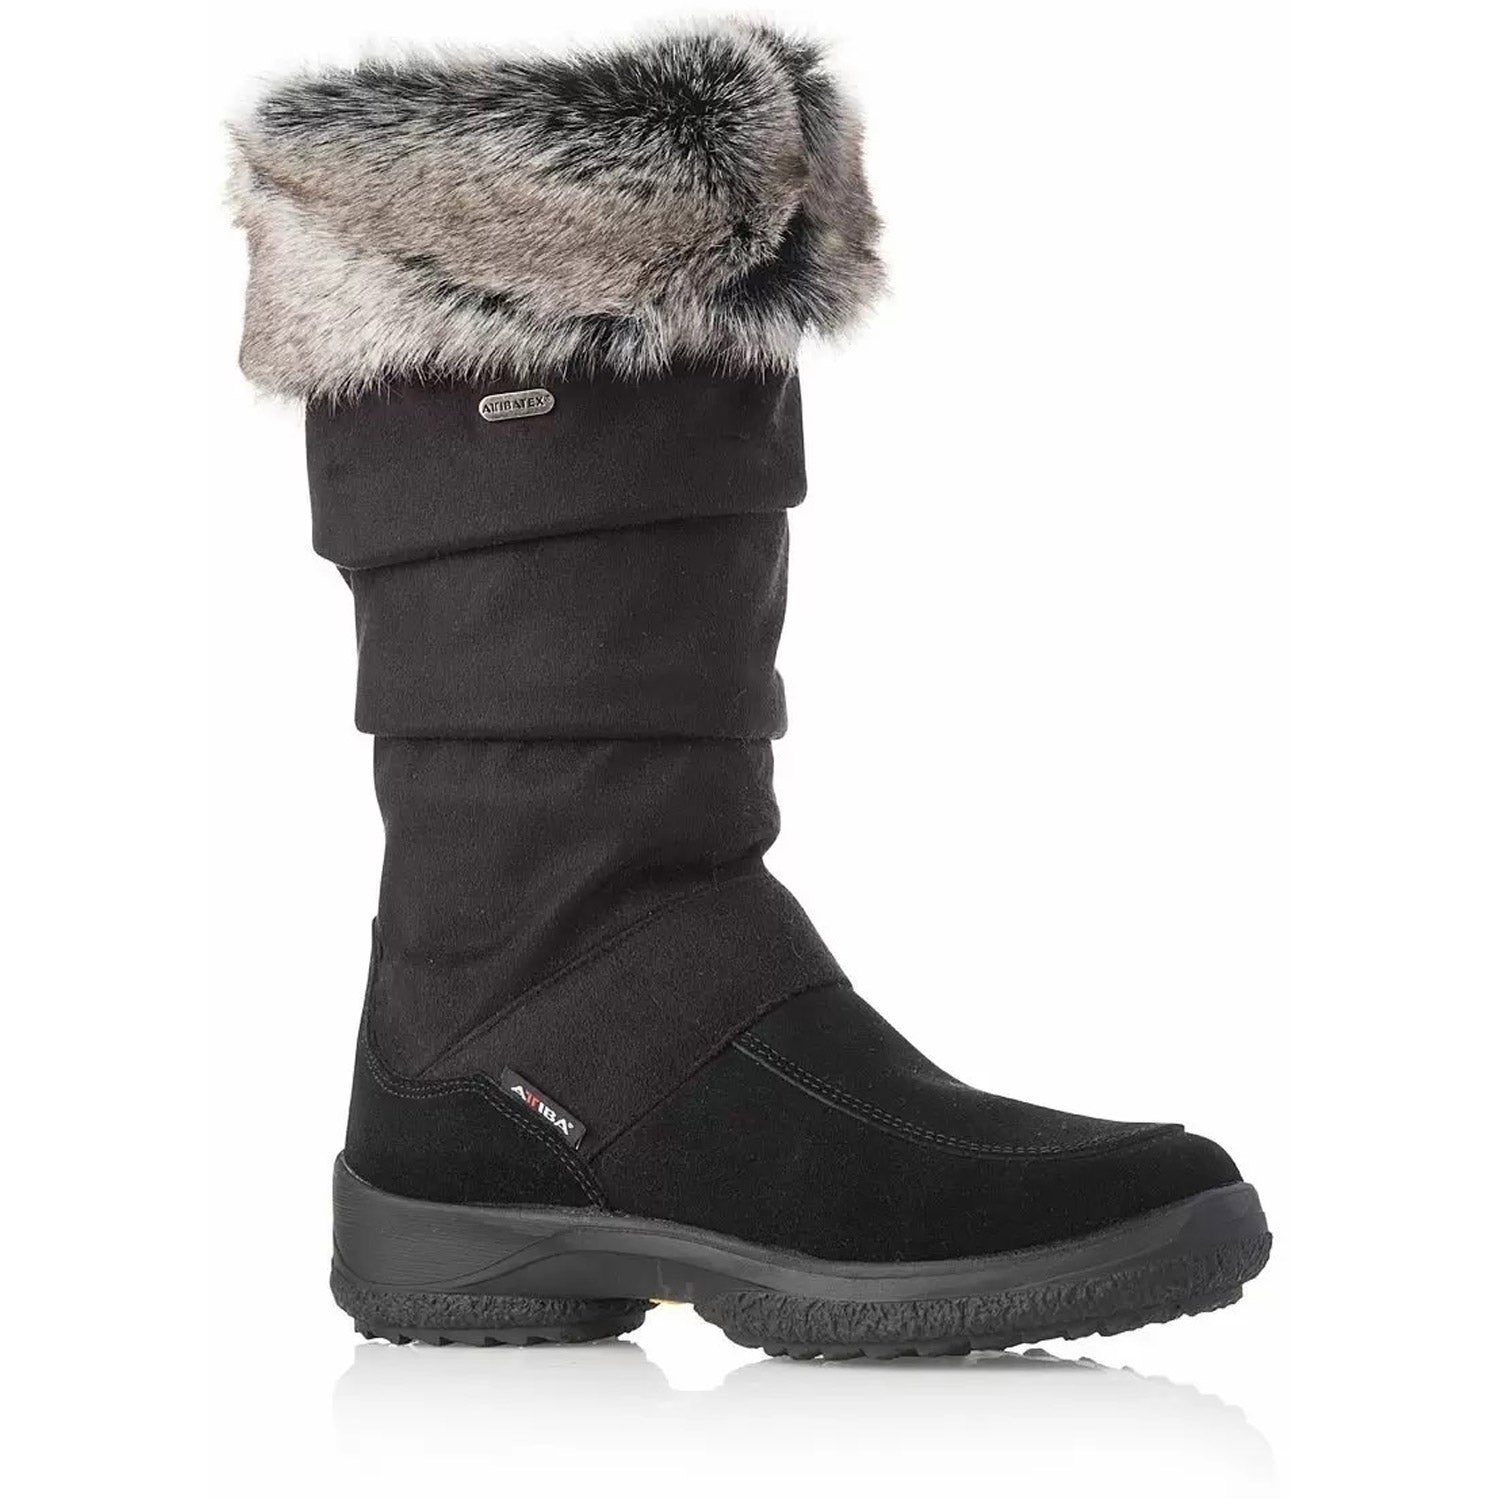 Attiba Snow Boots - Own It Now, Pay Later with Zip - Auski Australia